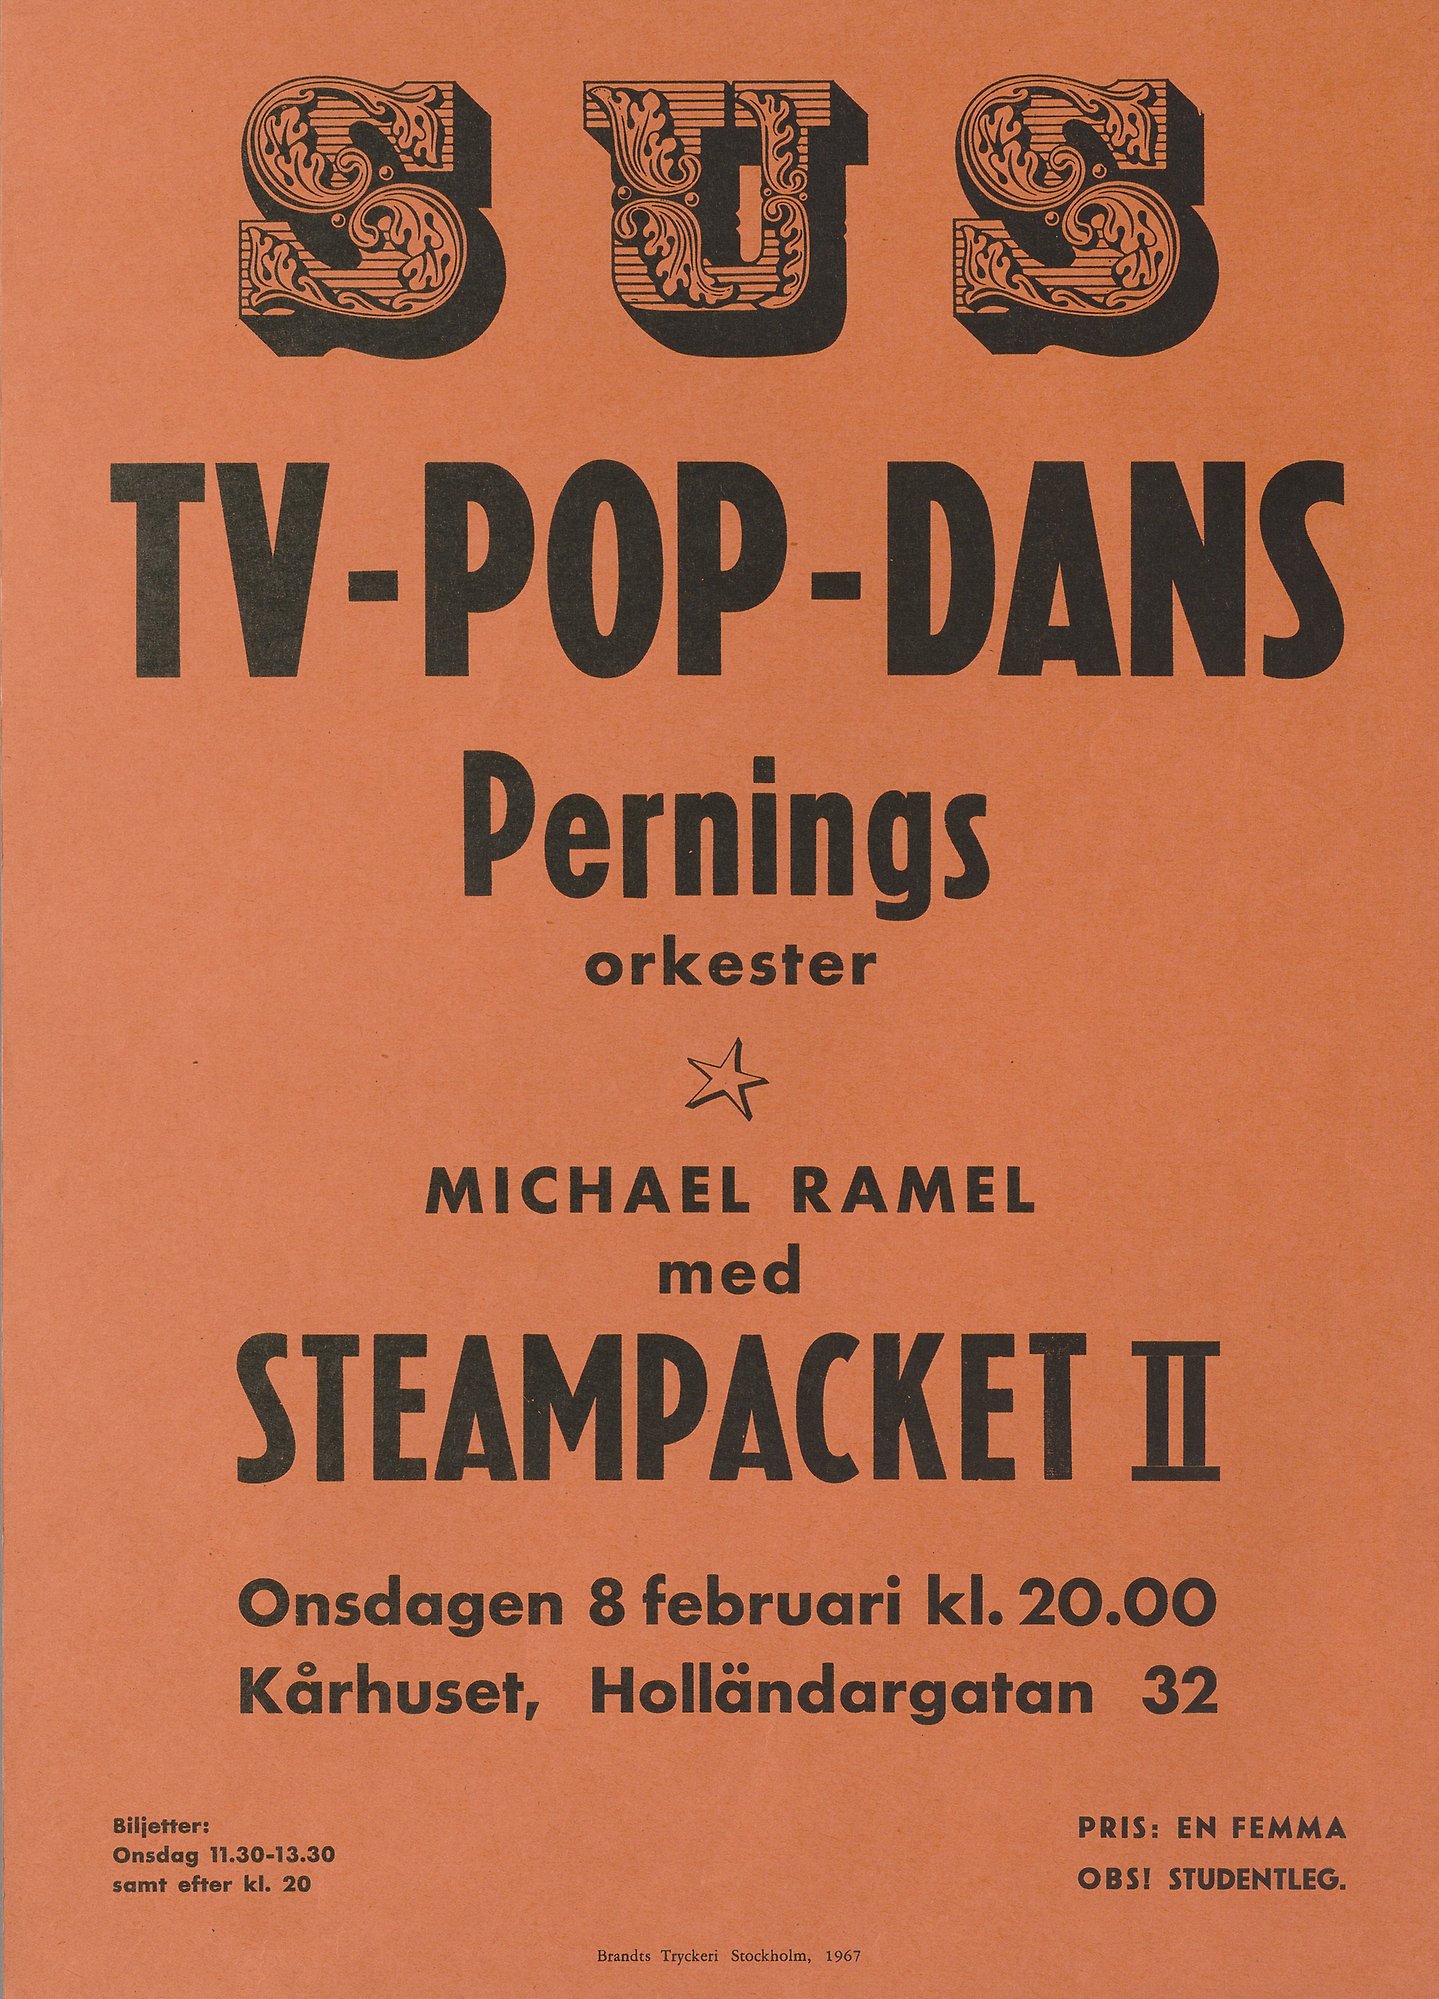 Orange affisch. Text: Michael Ramel med Steampacket II